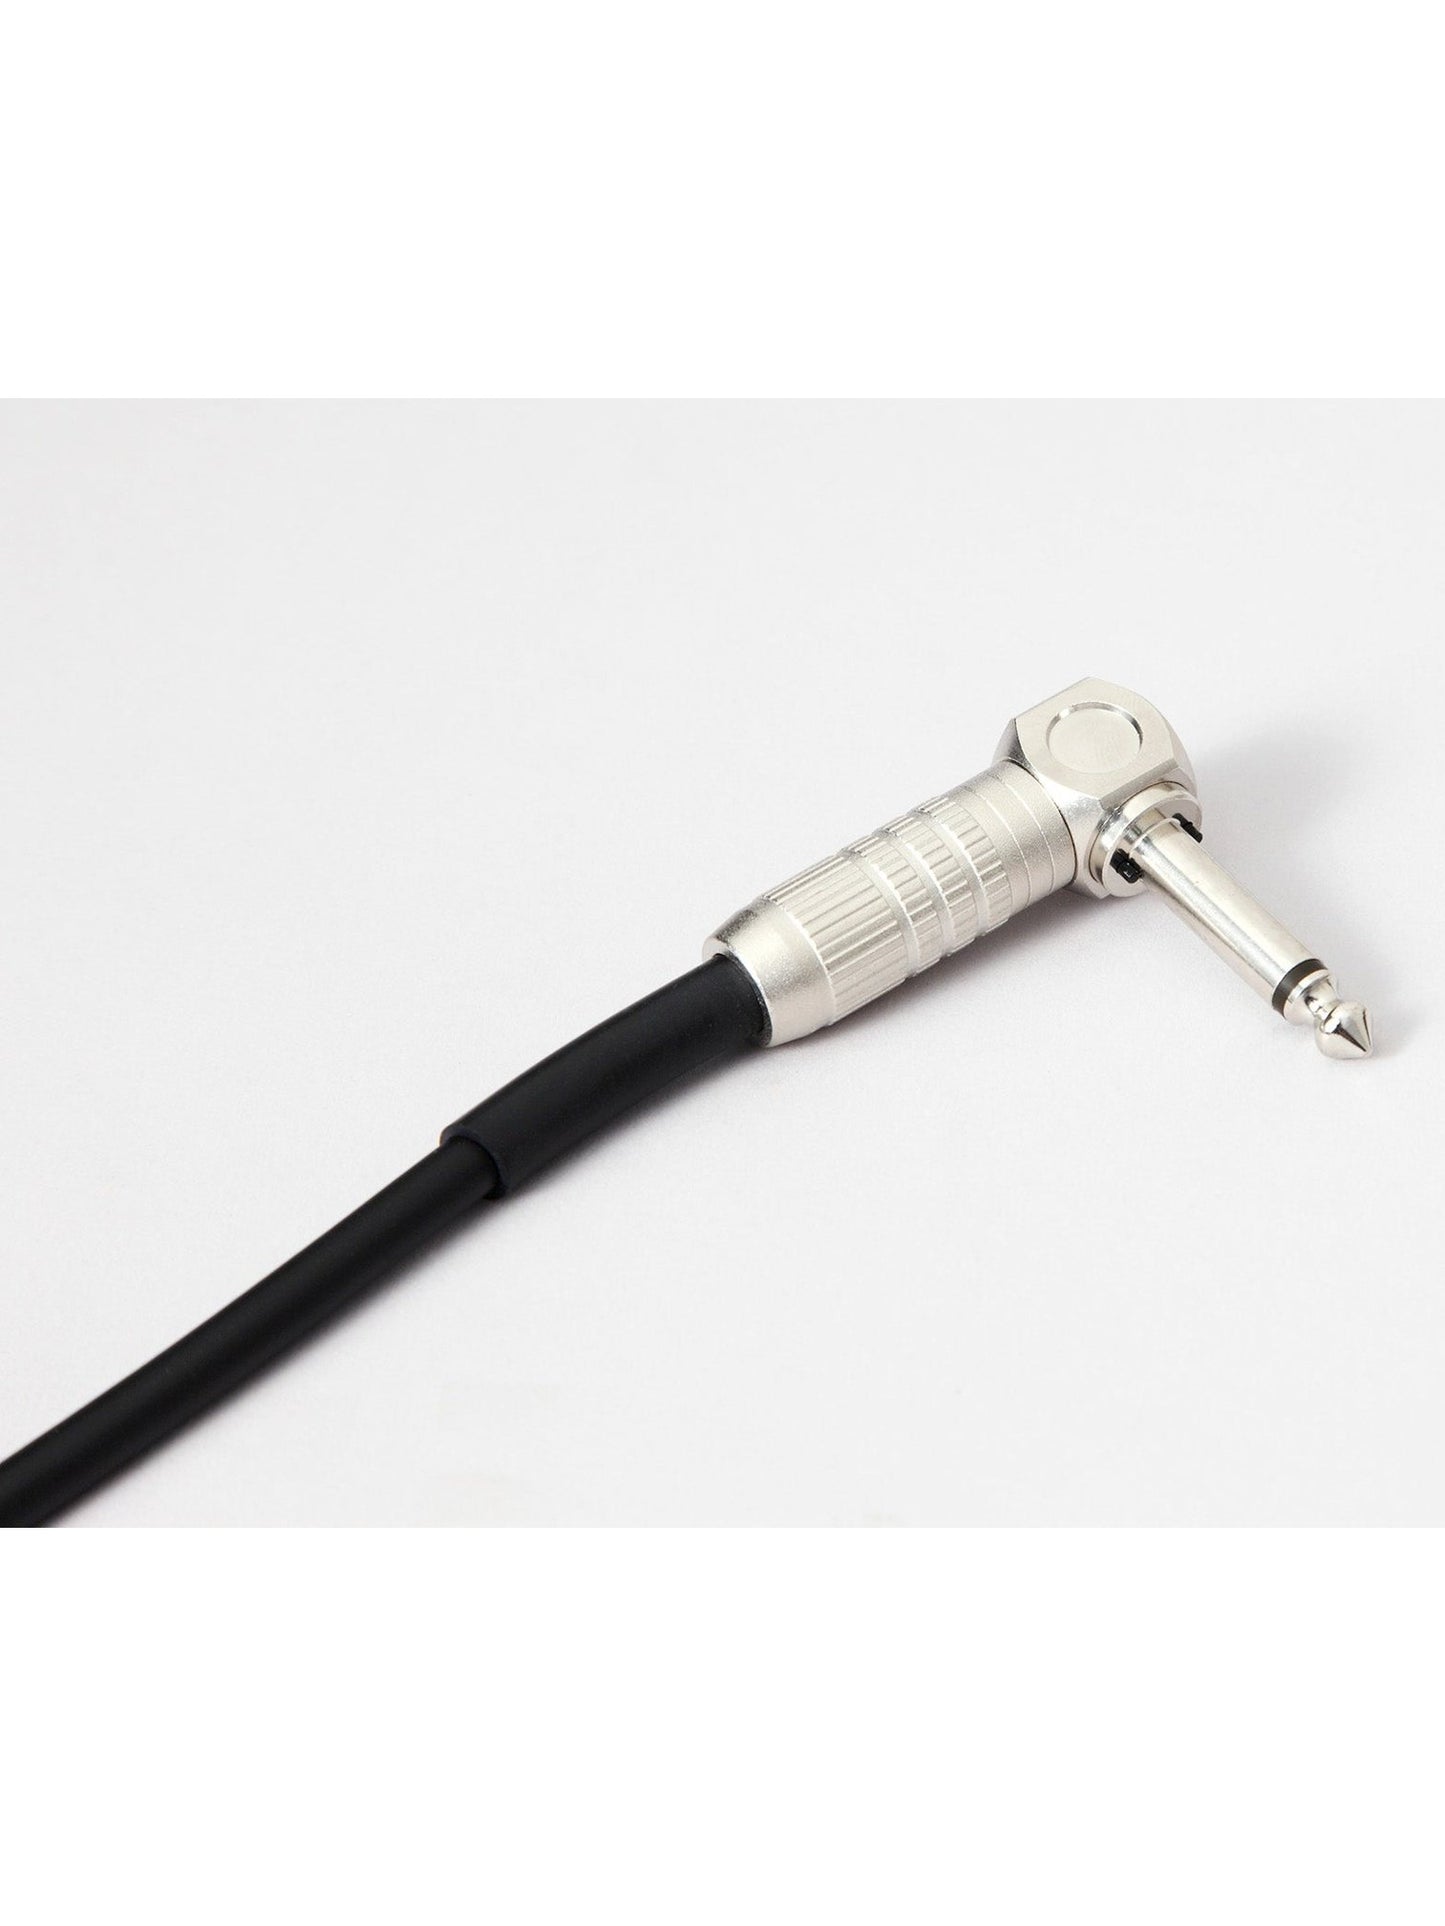 Takamine Guitar Cable TGC-1/55 (Original Takamine Product)